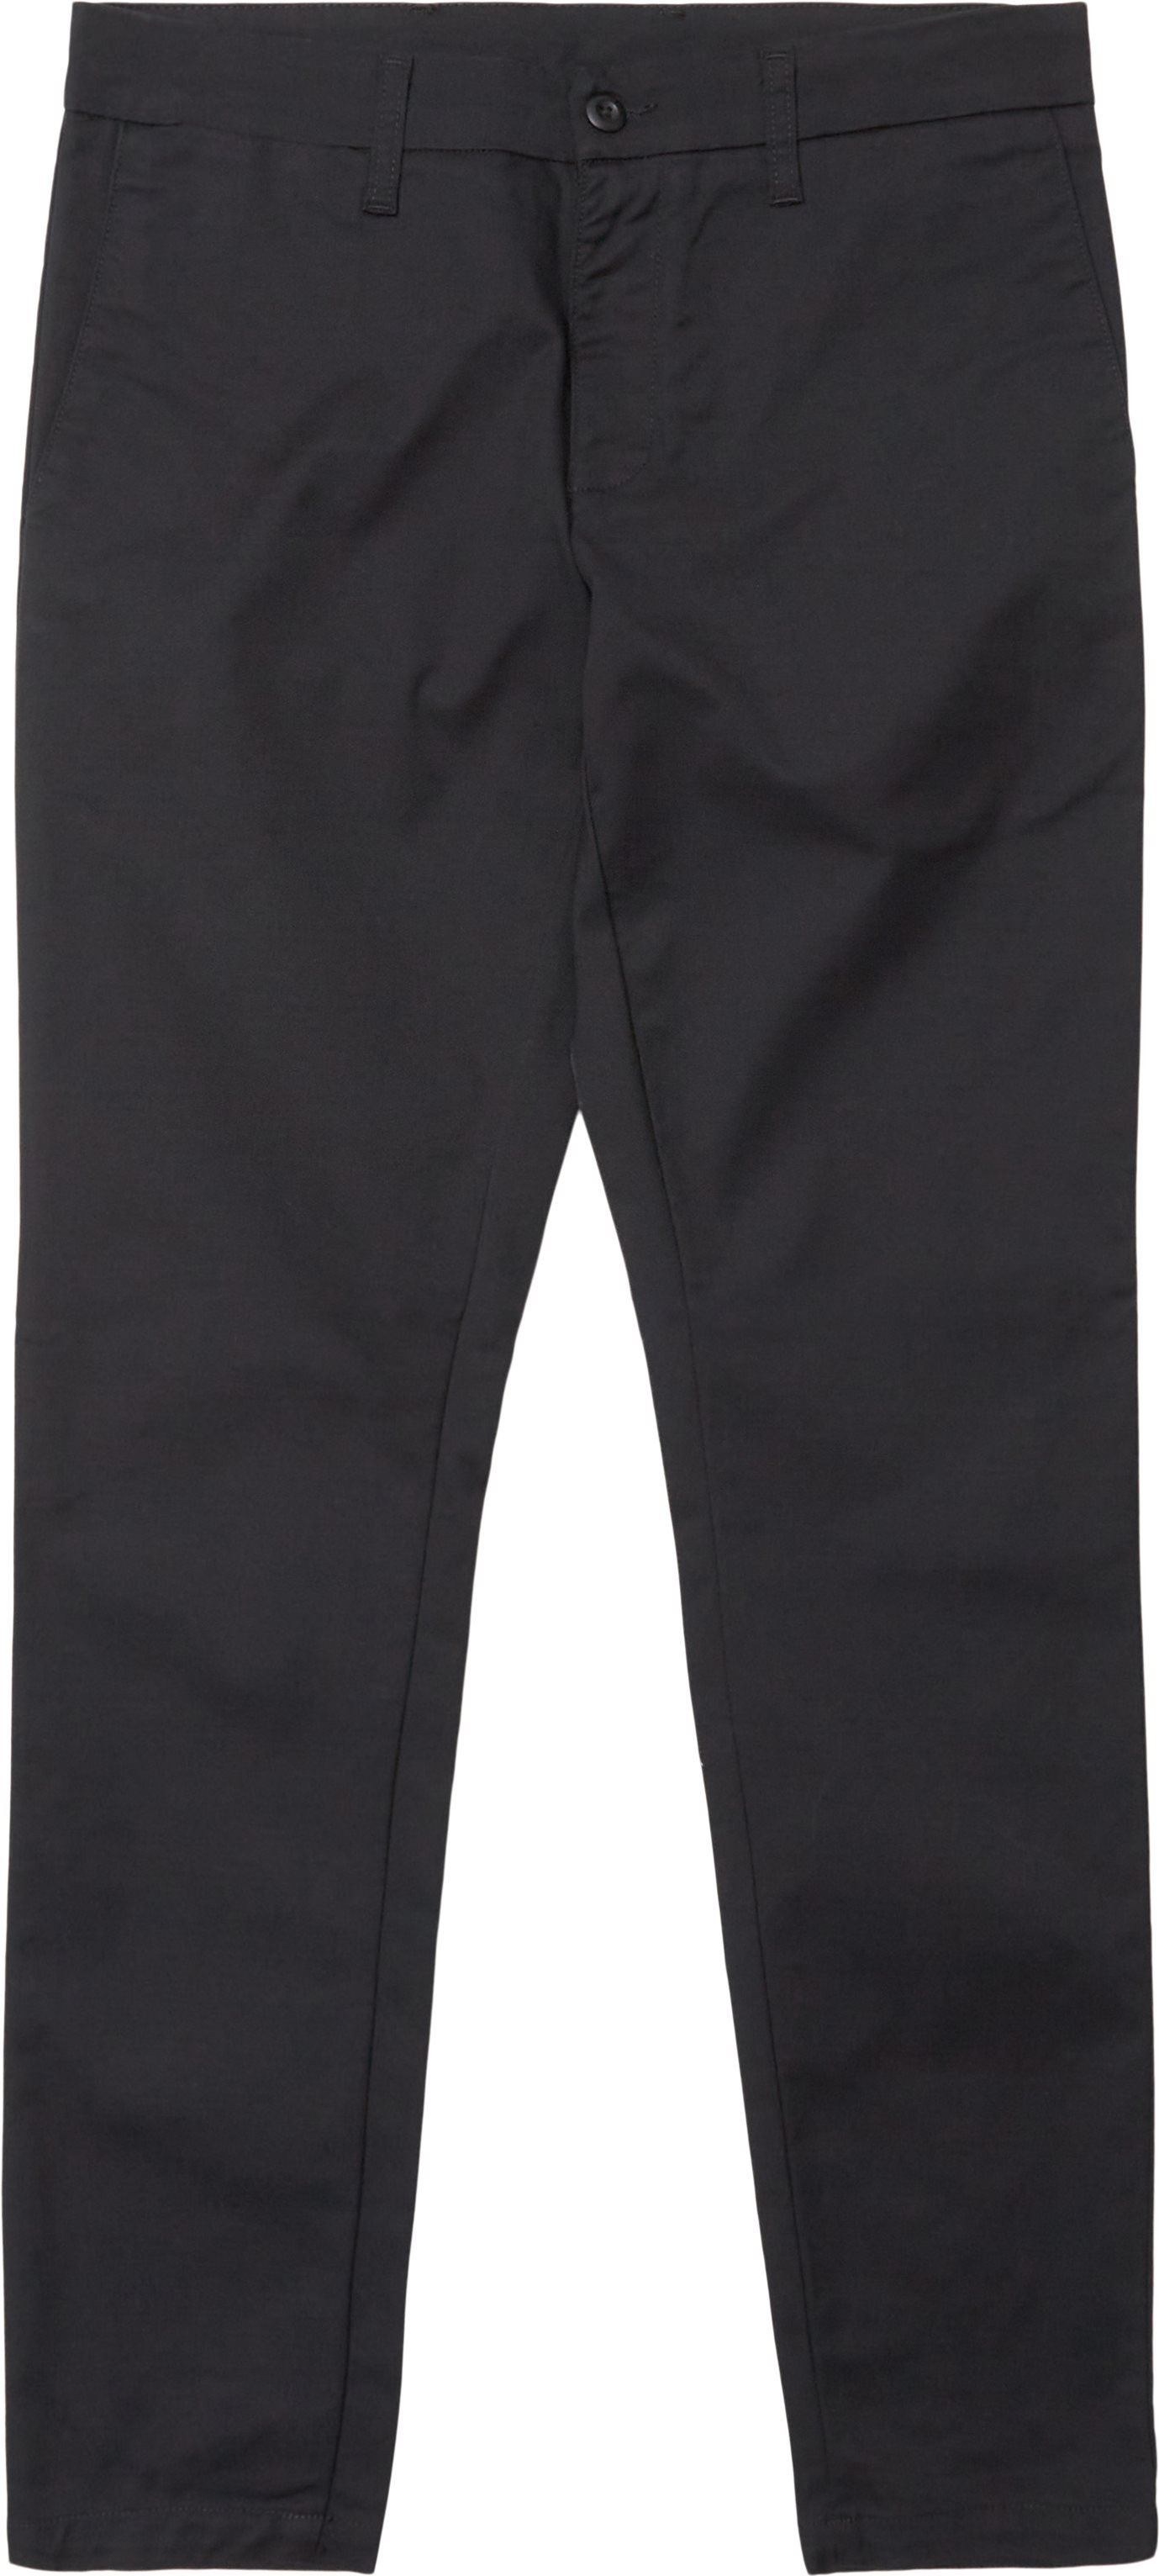 Sid Pant - Trousers - Slim fit - Black